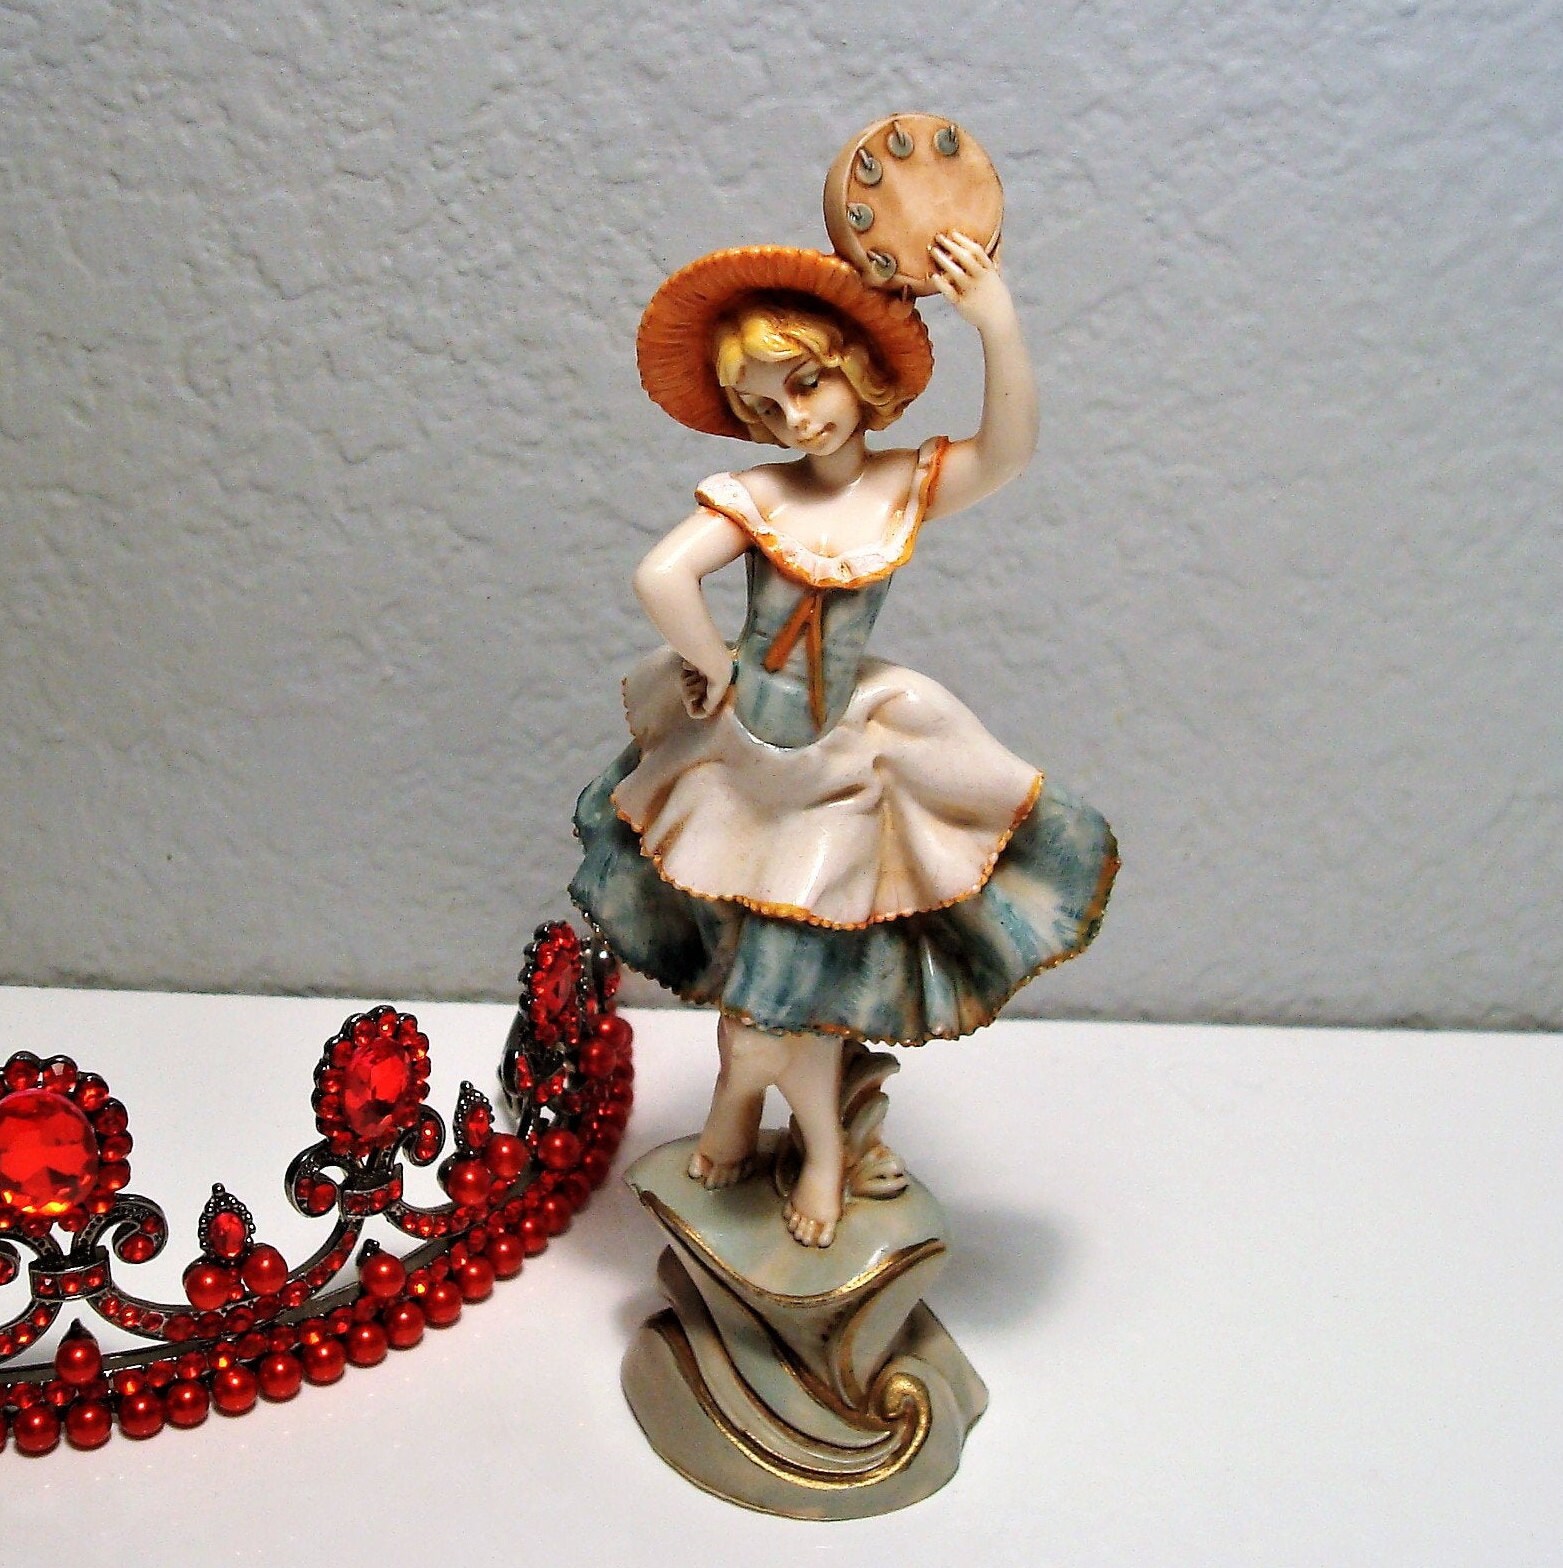 Vintage TAP DANCER FIGURINE Tara the Tap Dancer Figurine | Etsy